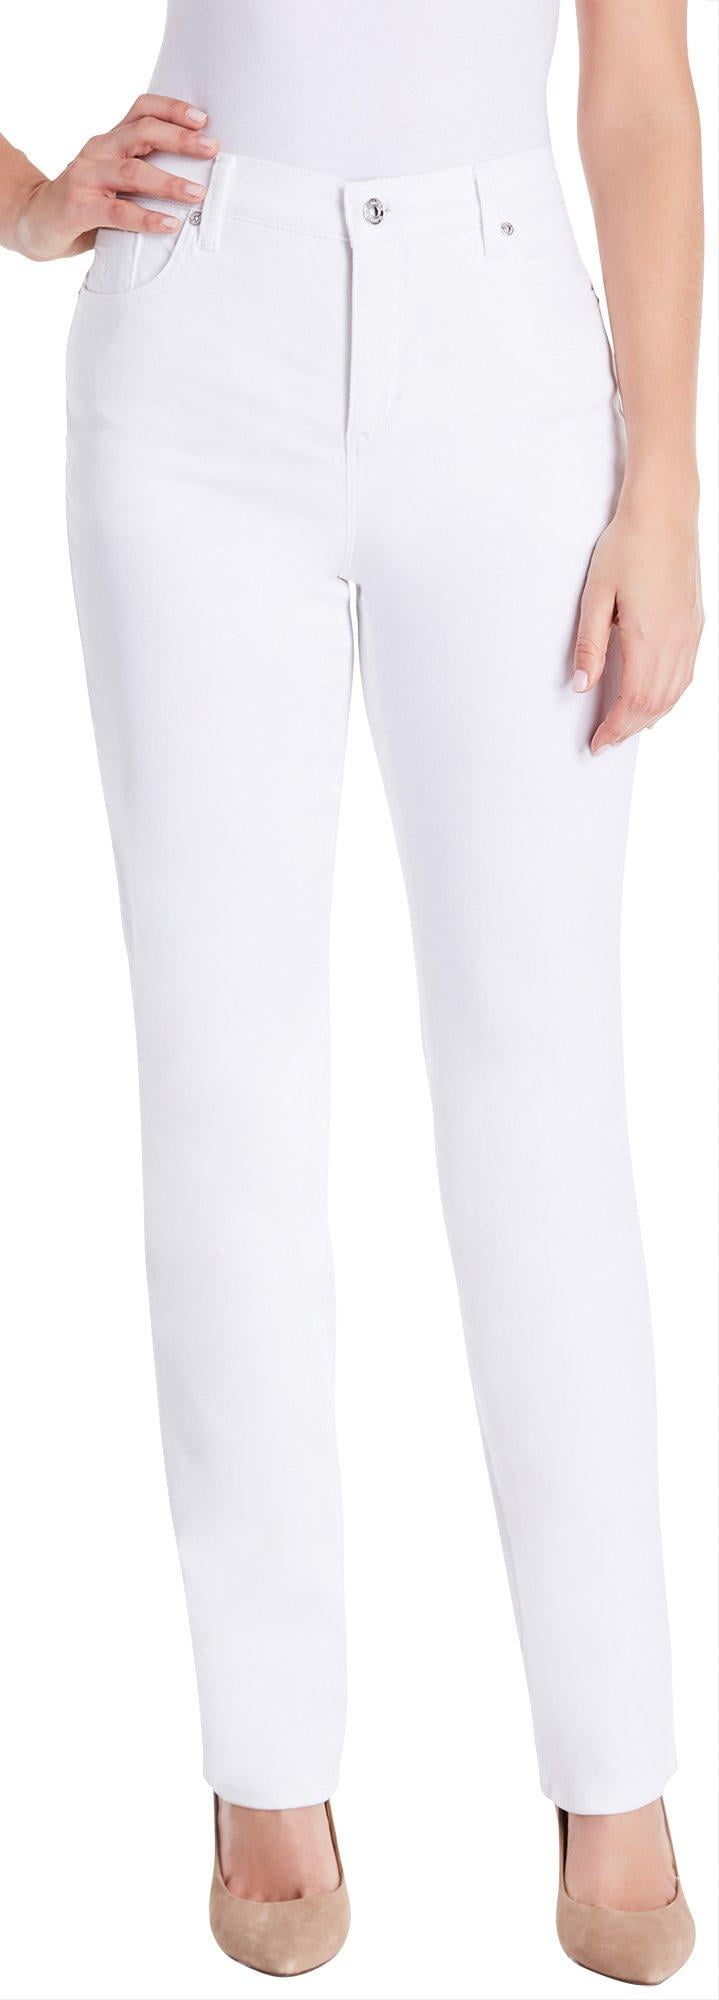 Slimming Amanda Petite Original Vanderbilt Jeans Gloria